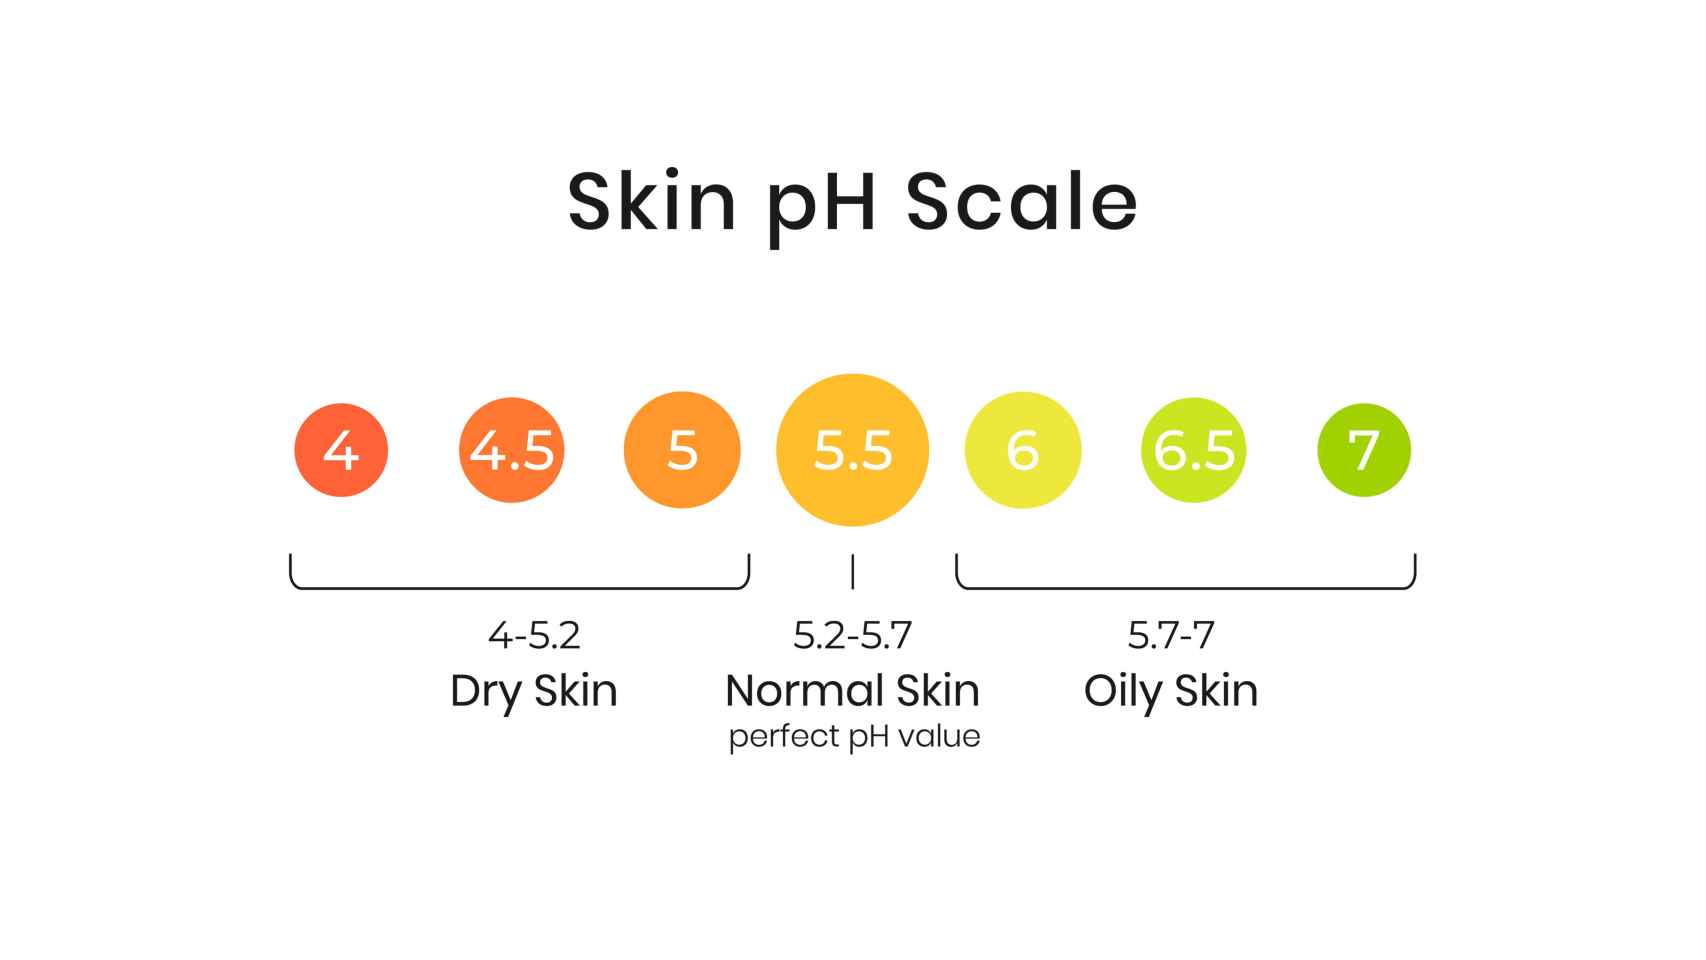 Escala del pH